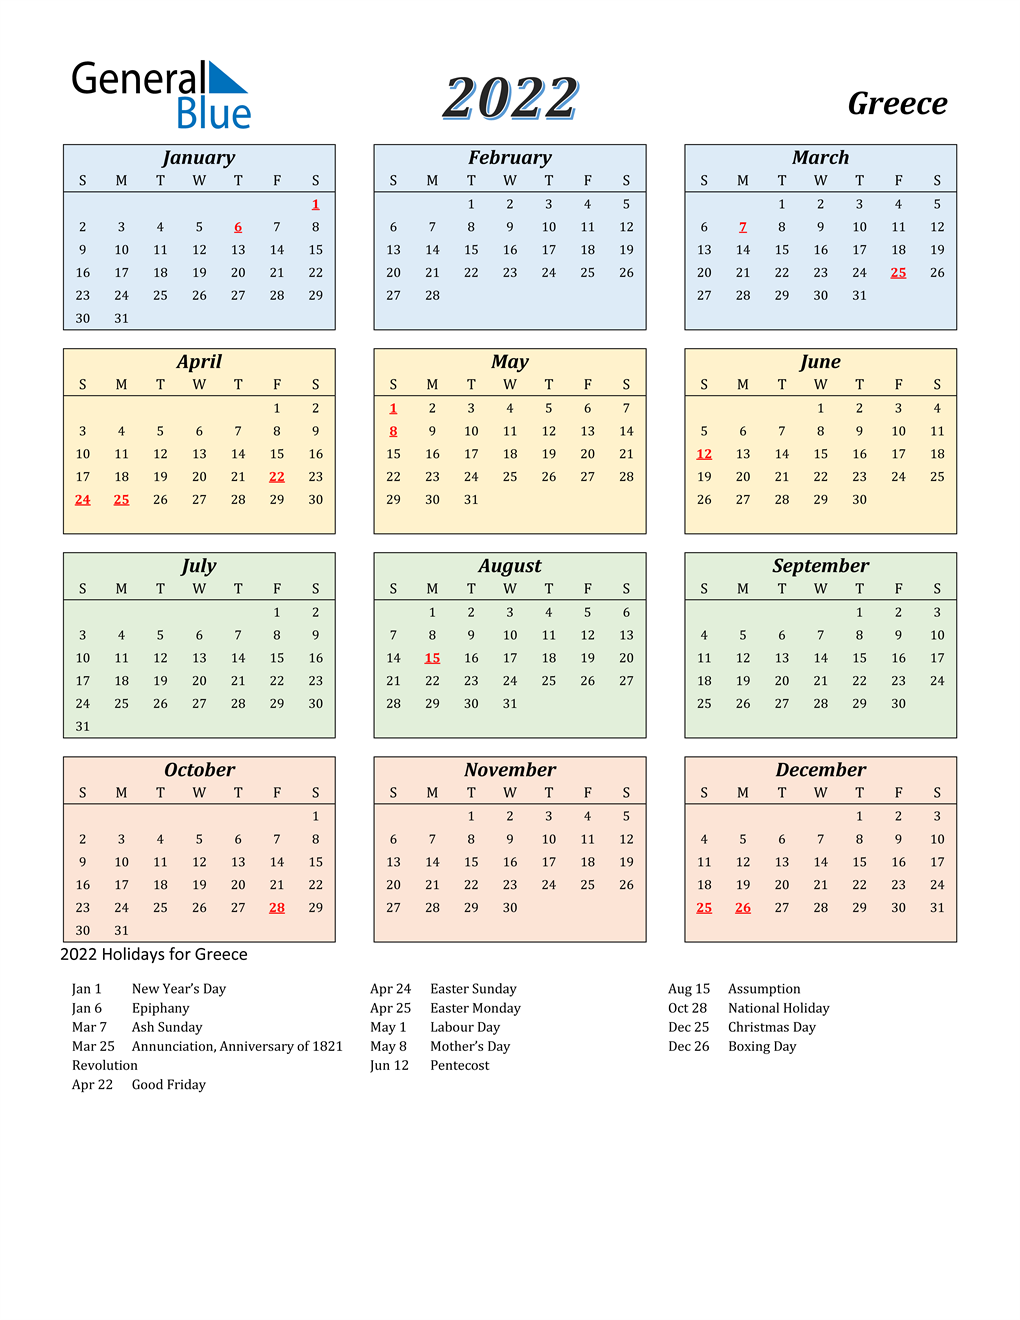 Greek Orthodox Calendar 2022 2022 Greece Calendar With Holidays